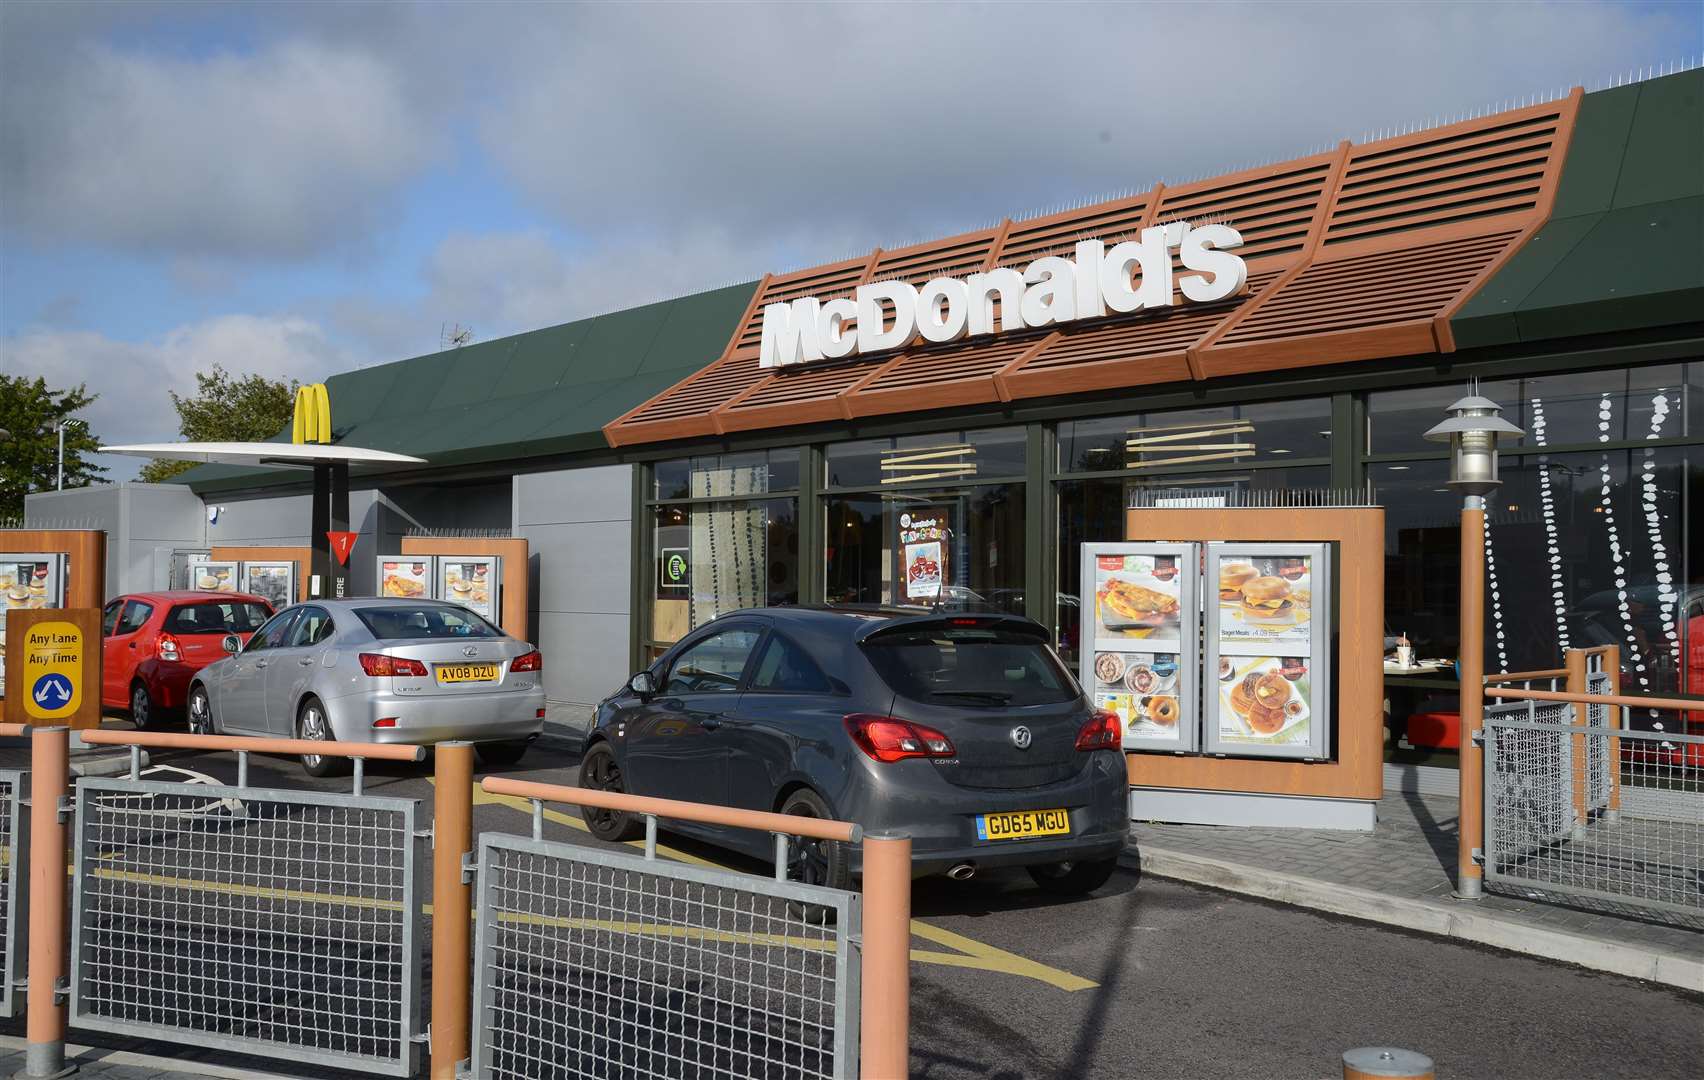 Snodland is set to get a McDonald's drive thru